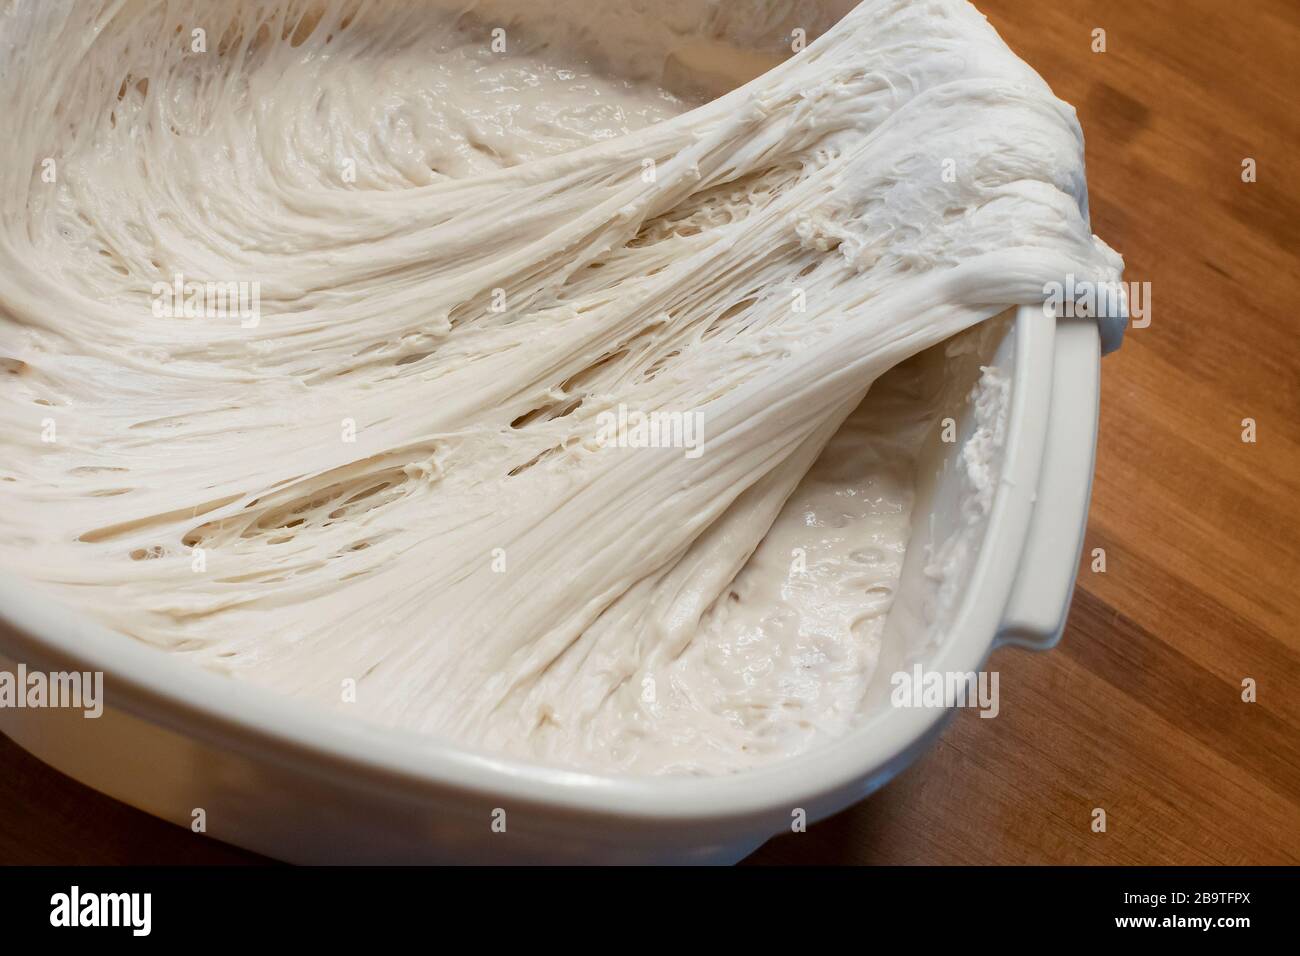 Closeup of the gluten strands in a batch of rising dough Stock Photo